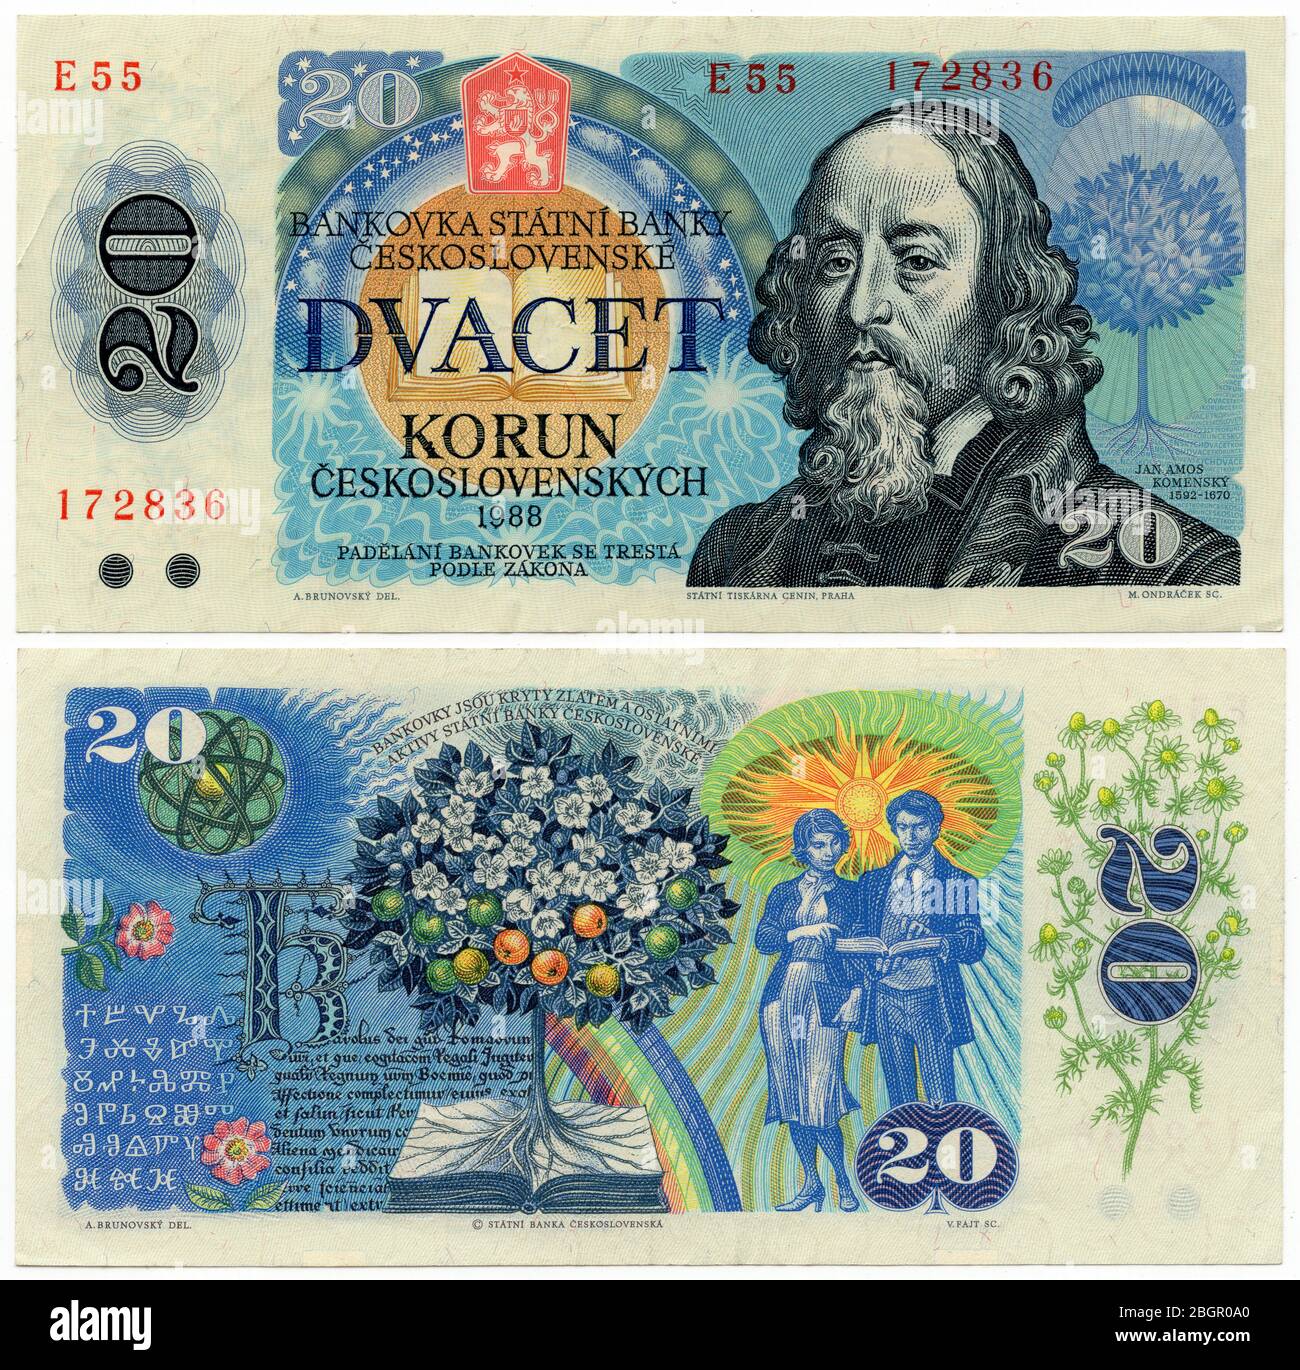 20 Czechoslovak koruna banknote (1988) issued in the Czechoslovak Socialist Republic. The banknote was designed by Slovak graphic artist Albín Brunovský. Czech philosopher and pedagogue John Amos Comenius (Jan Amos Komenský) is depicted in the verso. Stock Photo